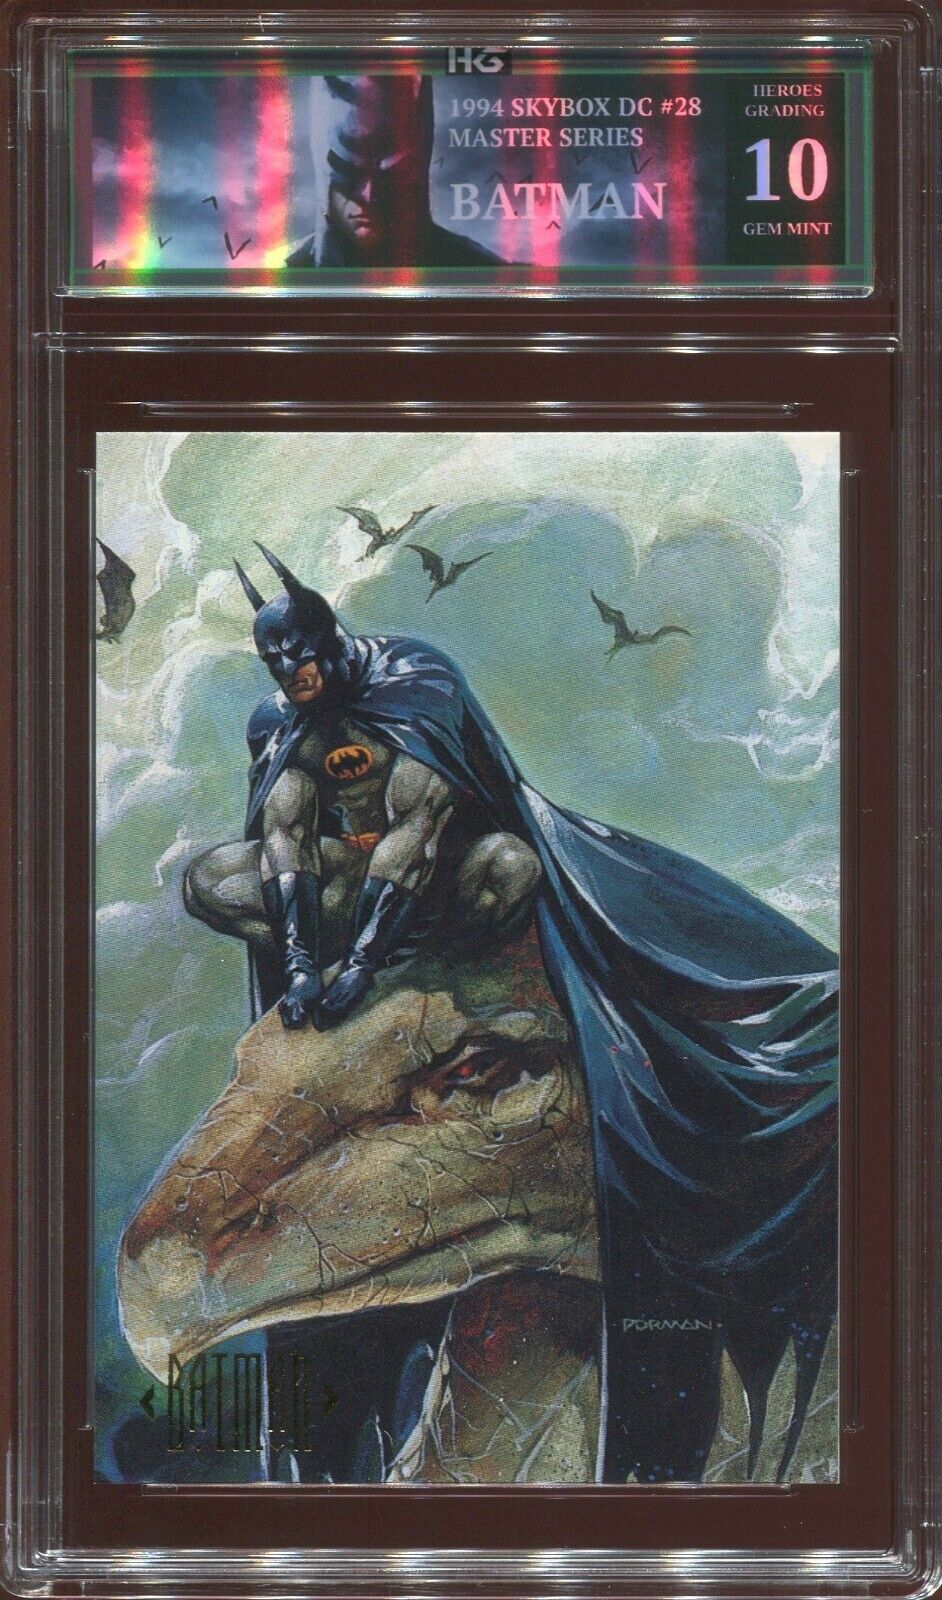 1994 SKYBOX DC MASTER SERIES BATMAN #28 HEROES GRADING GEM MINT 10